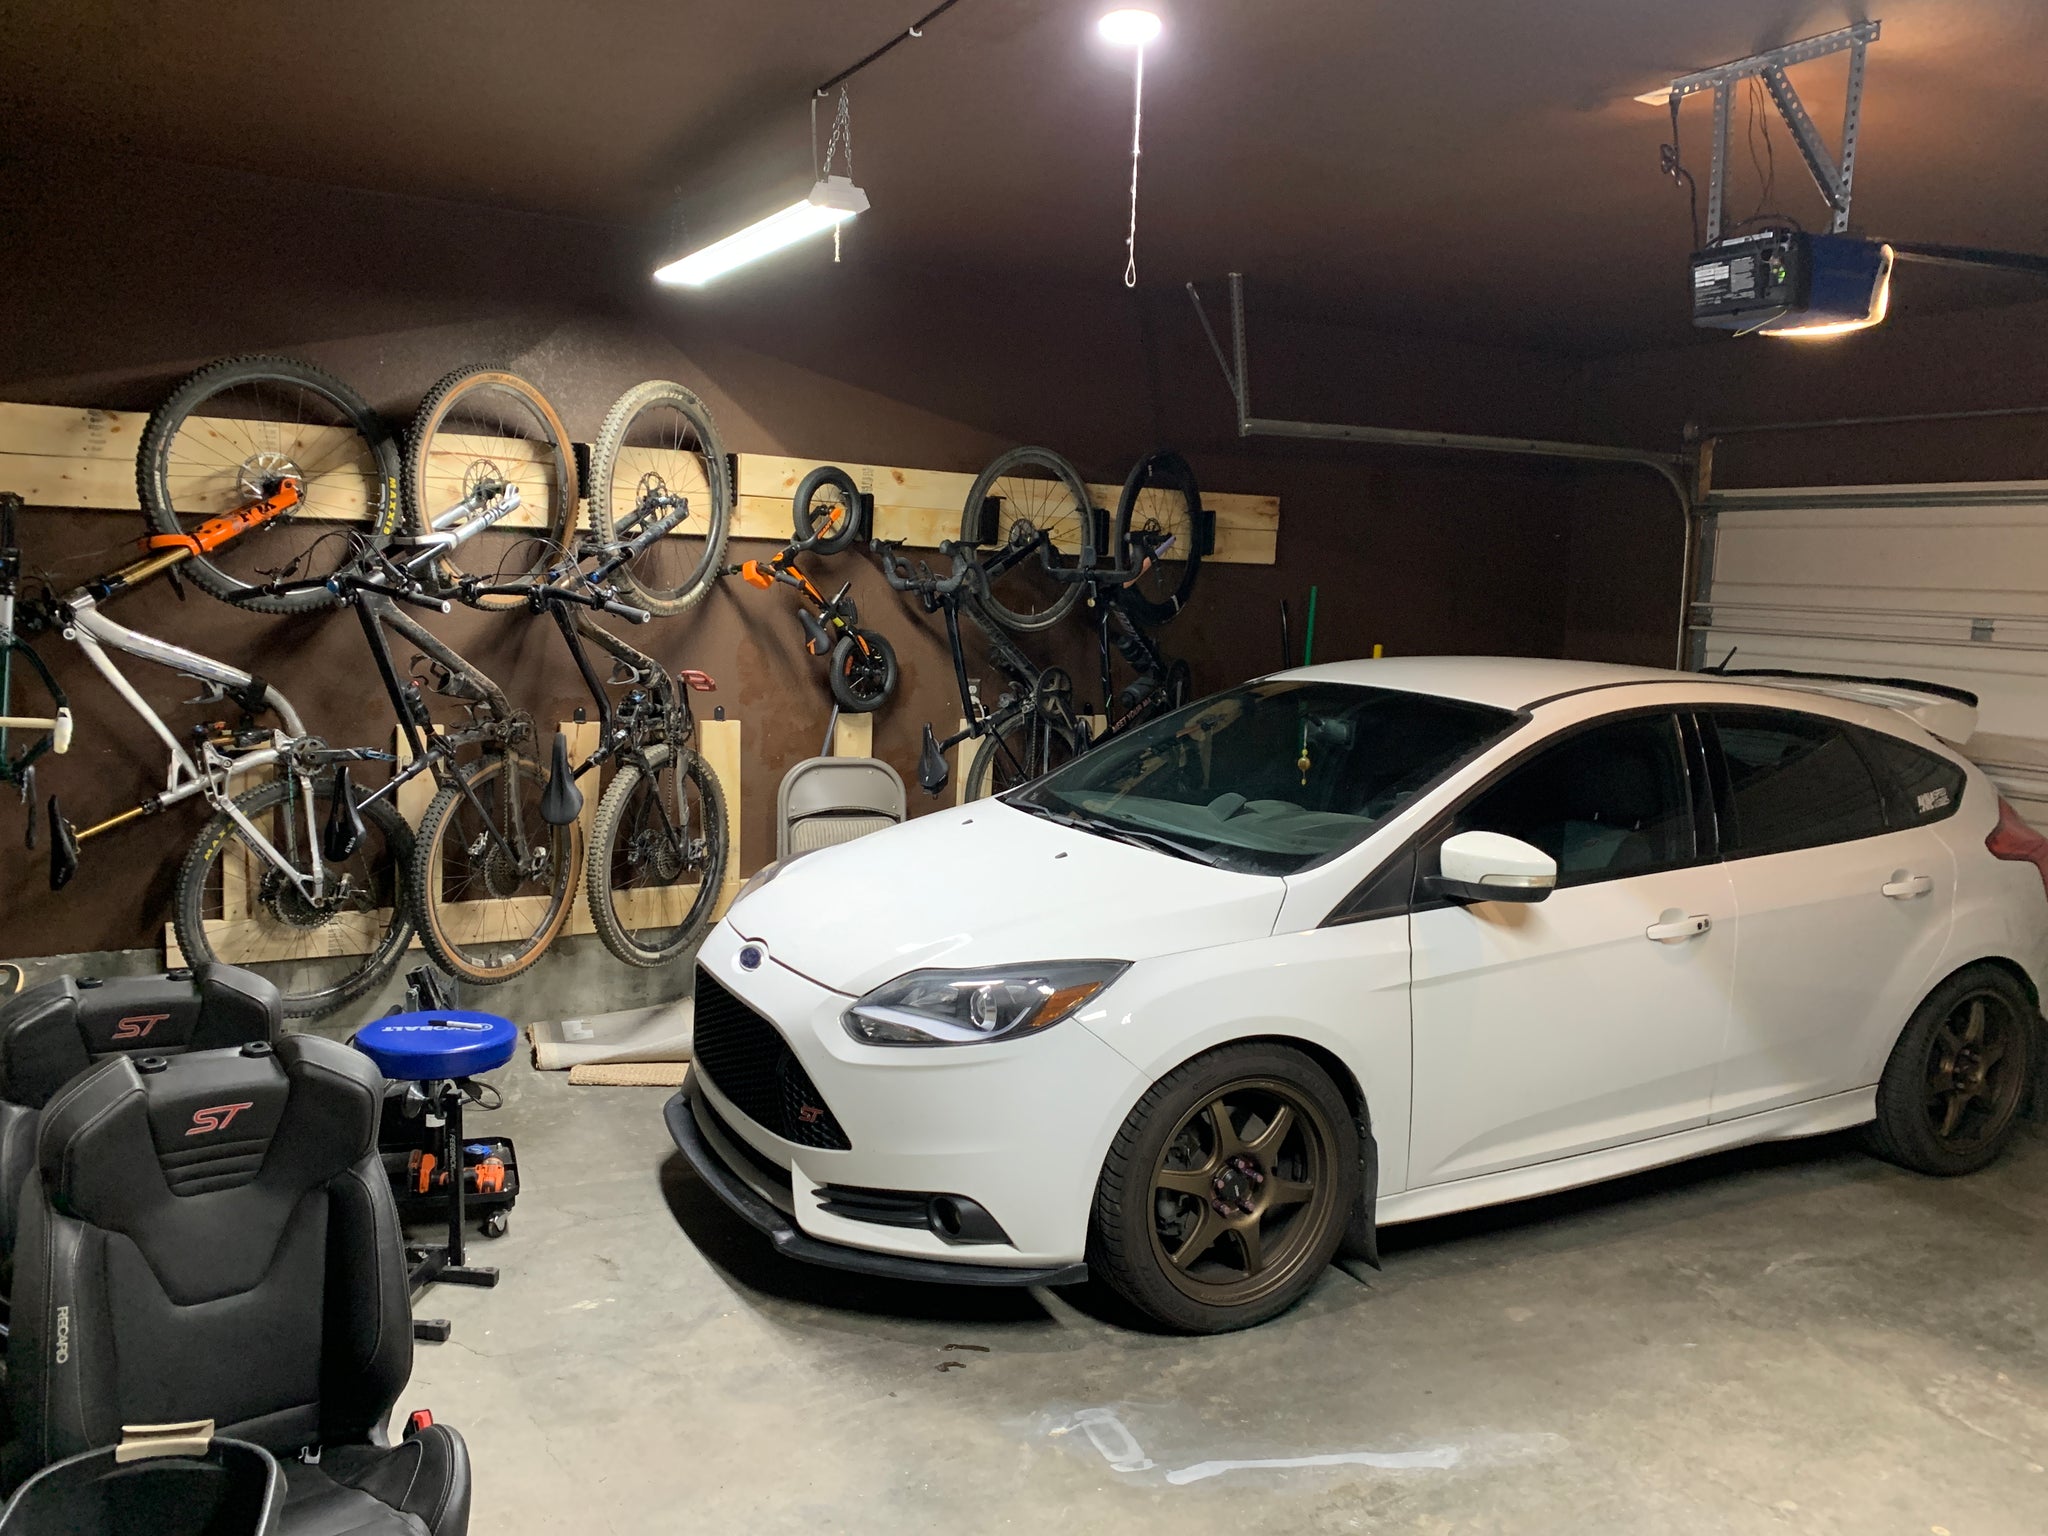 Feedback Velo Hinge bike hooks in garage